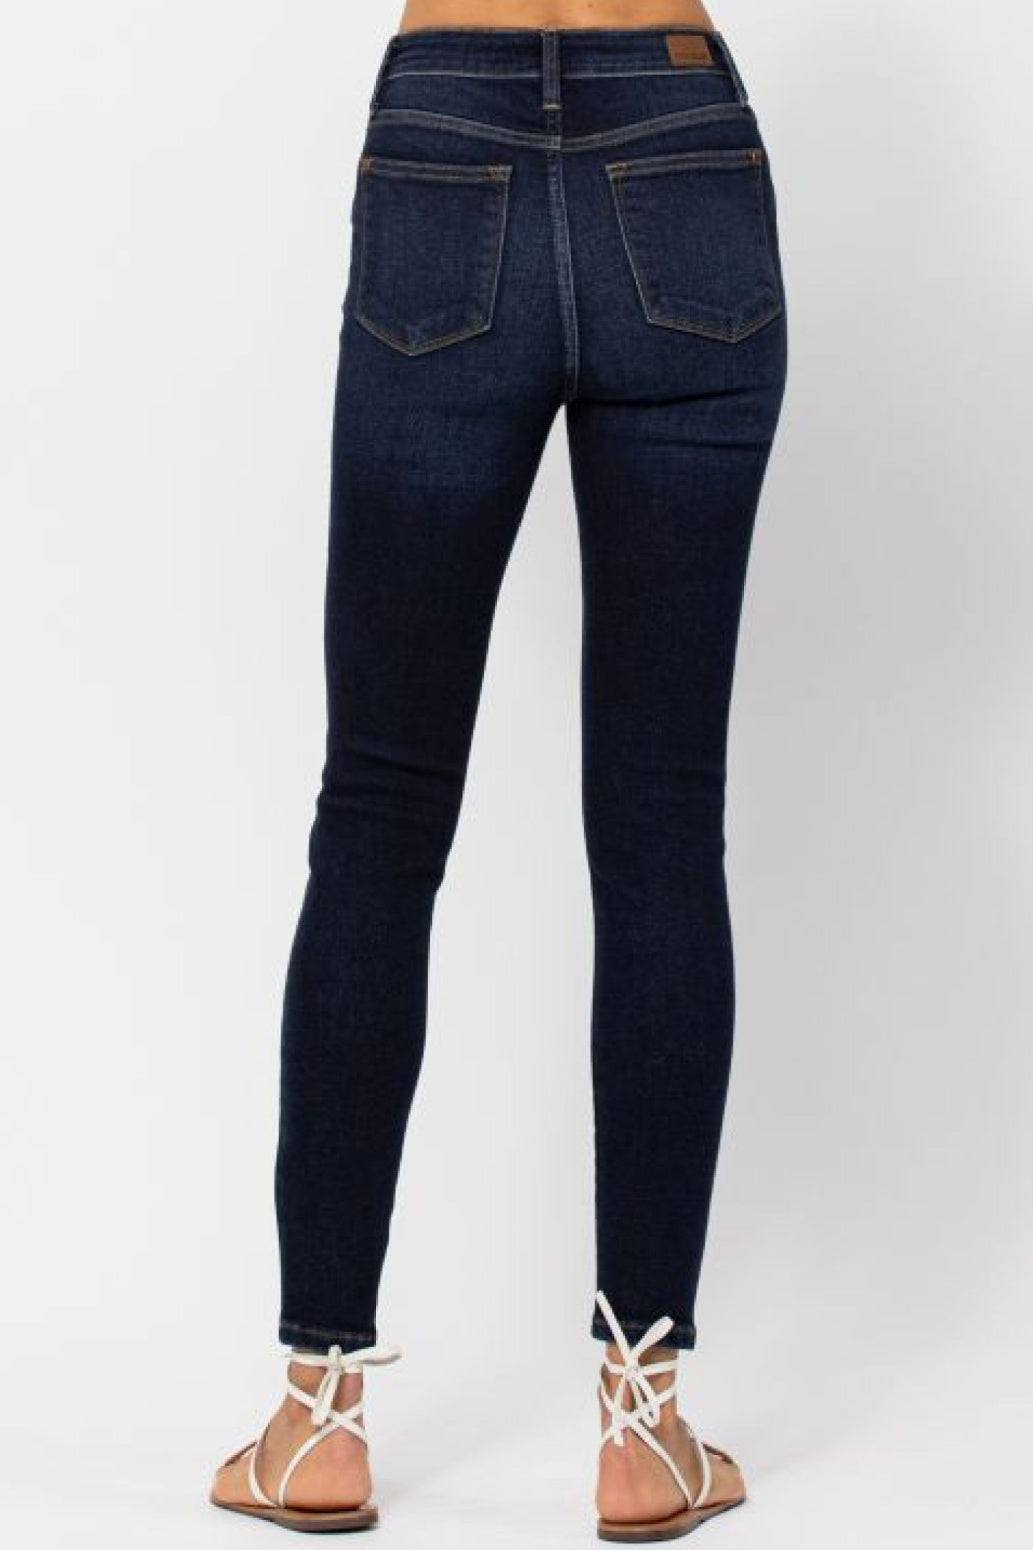 Judy Blue Handsand Skinny Jeans